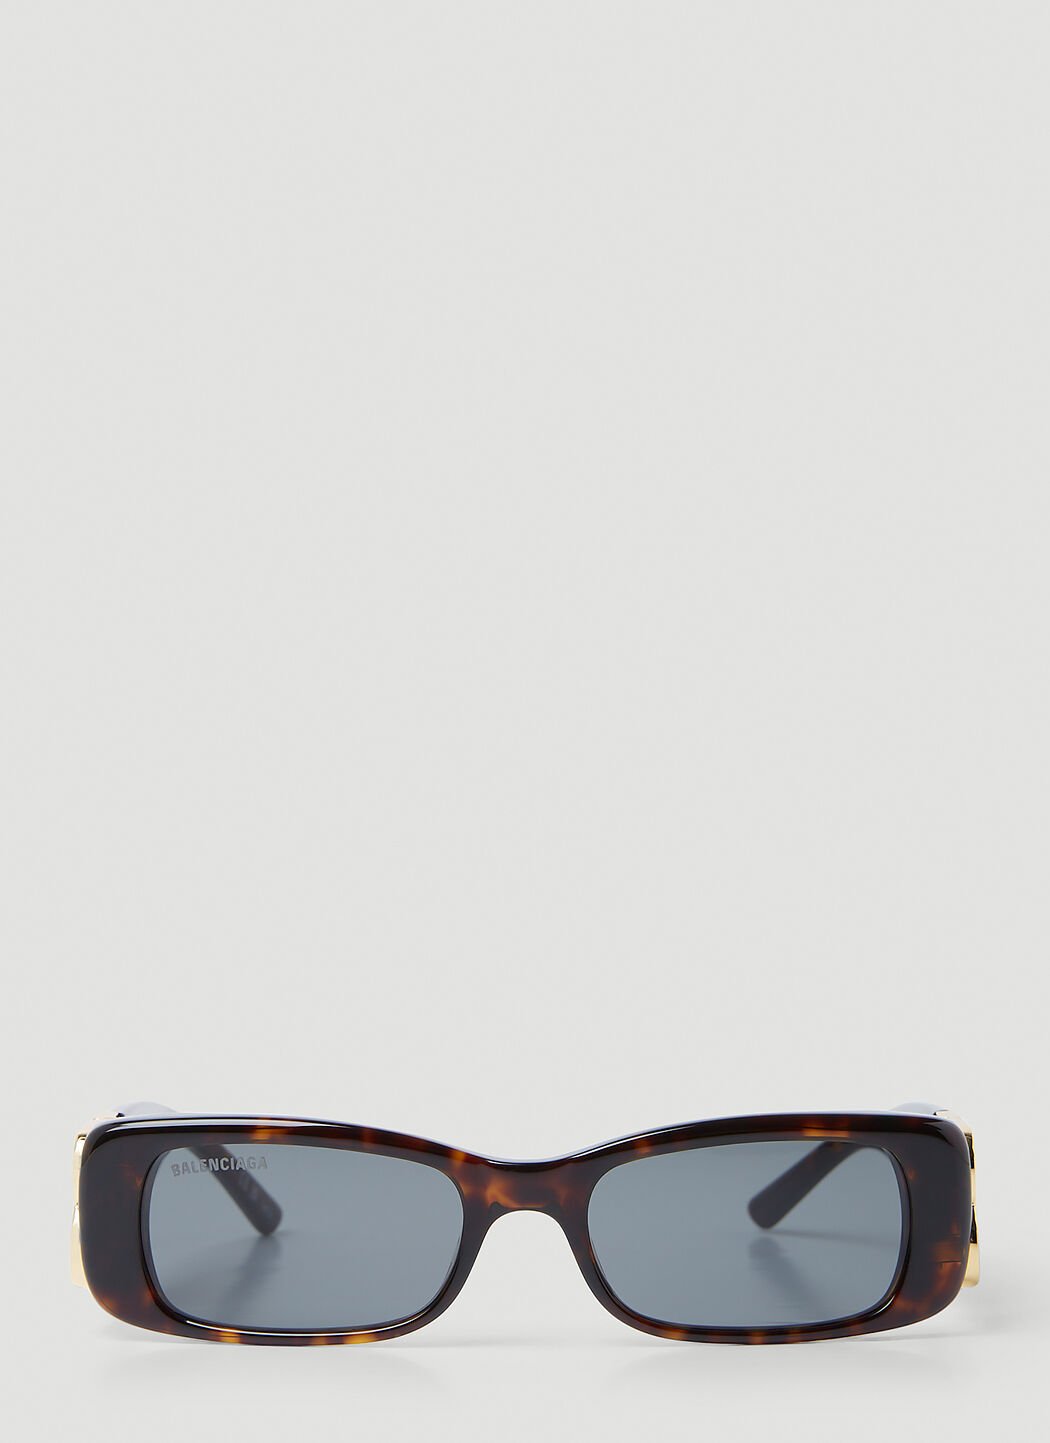 Vivienne Westwood Dynasty Rectangle Sunglasses Black vvw0254048